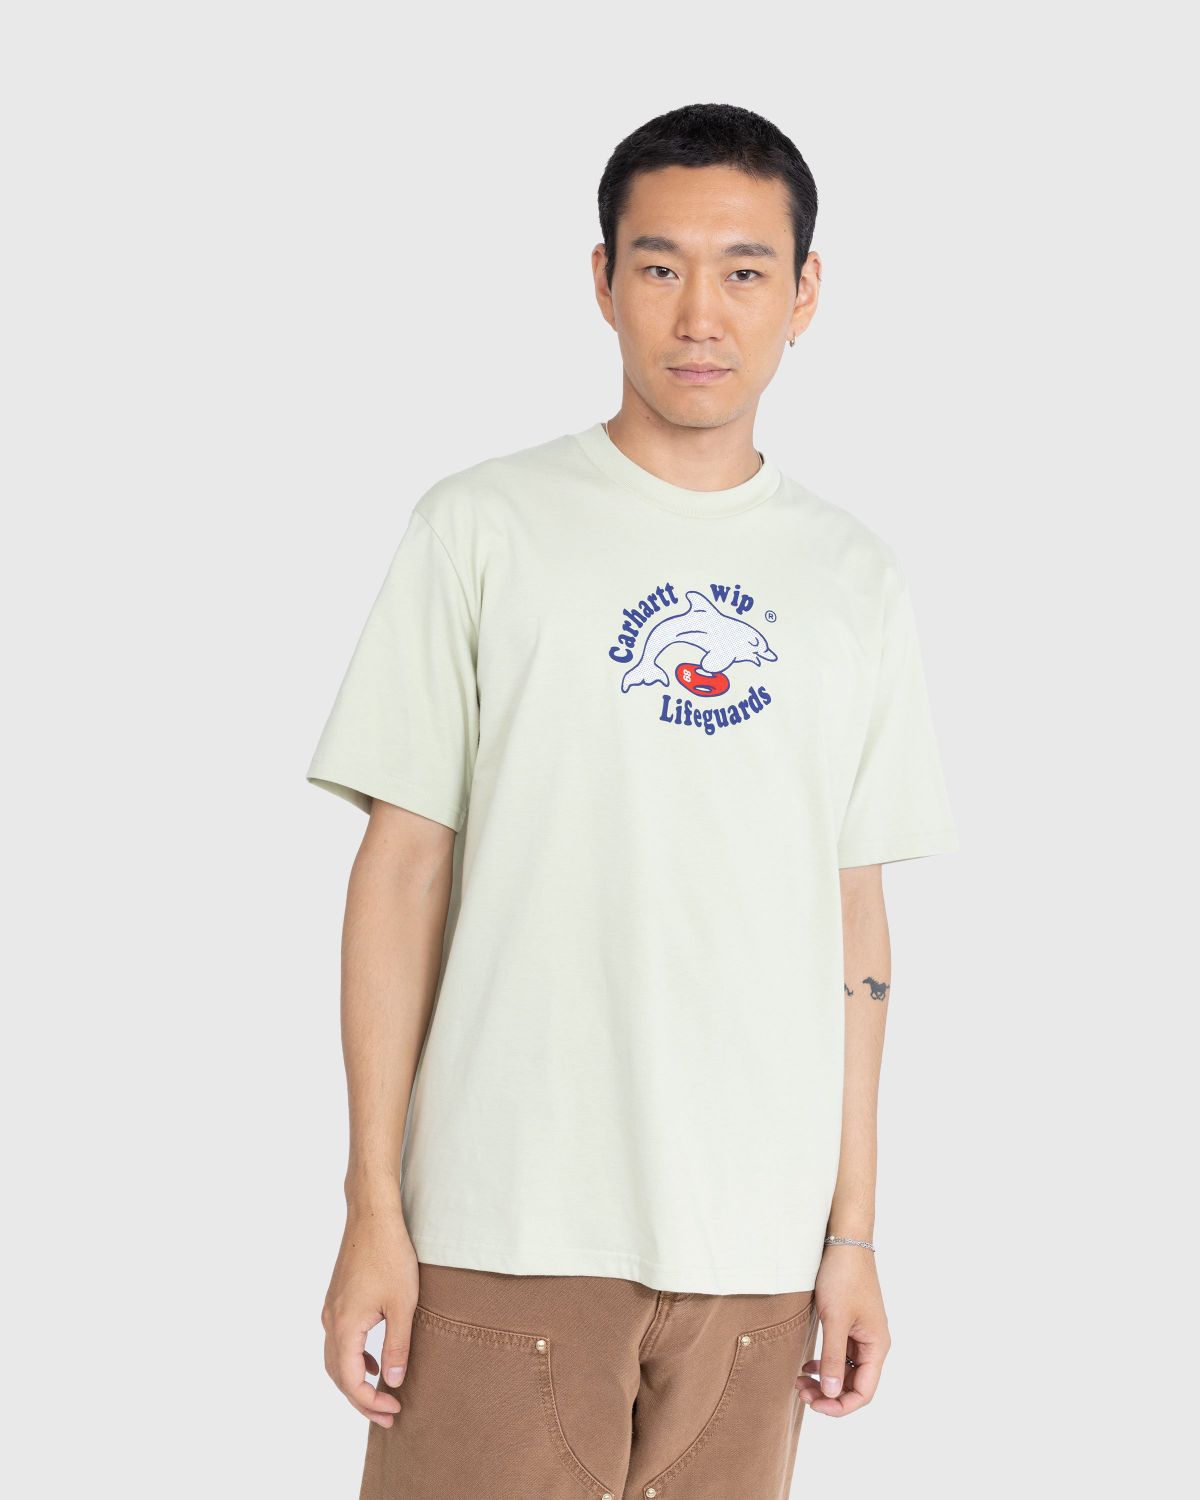 Carhartt WIP – Lifeguards T-Shirt Light Blue - Tops - White - Image 3